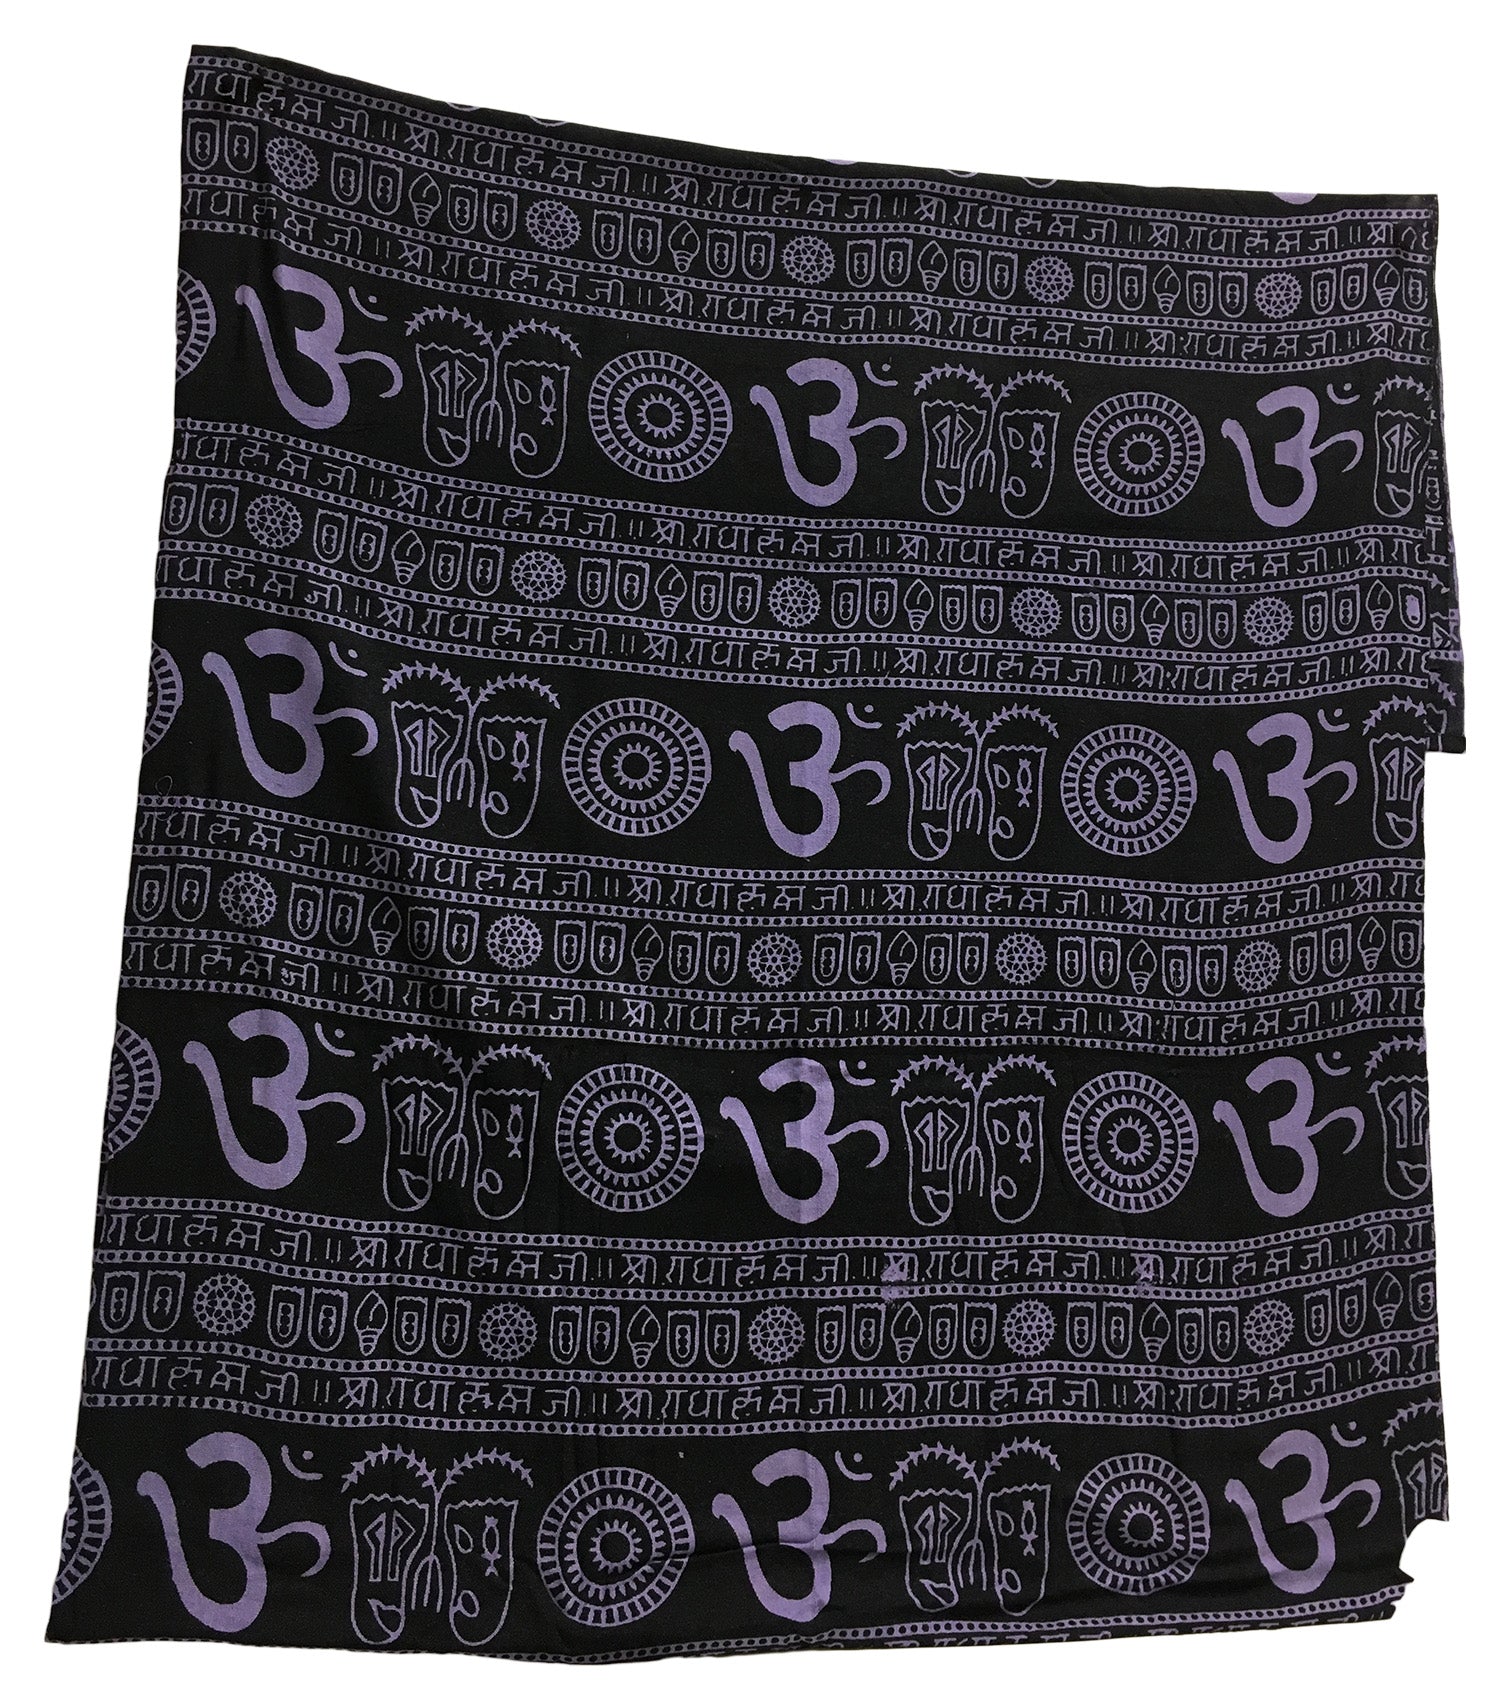 Indian Cotton Om Yoga Meditation Tapestry Throw Queen Size Bedspread - Ambali Fashion Tapestries beach, bohemian, boho, casual, coverlet, curtain, decor, decoration, dorm, ethnic, gypsy, hipp